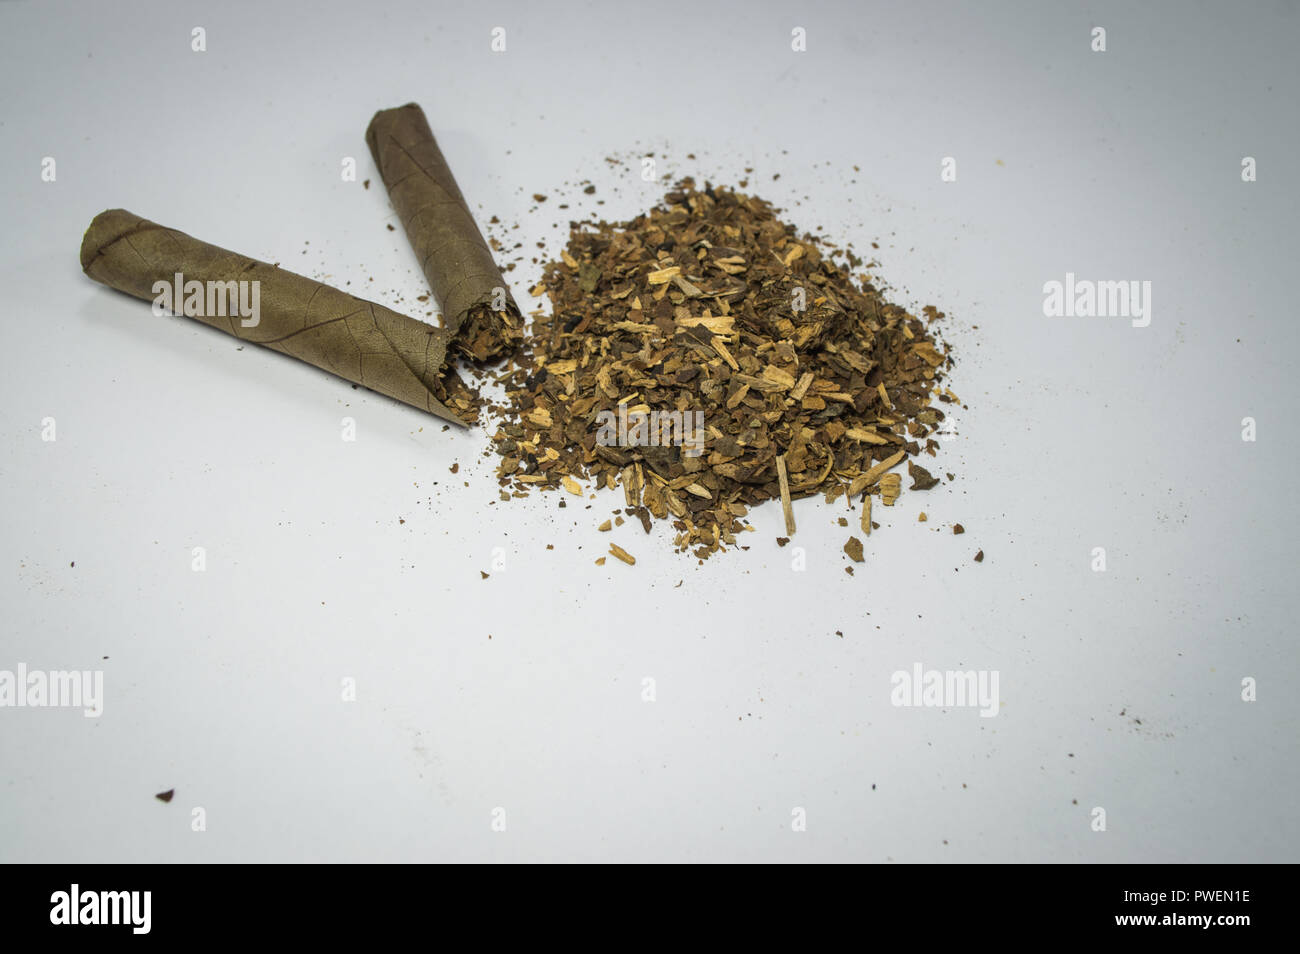 Native southeast asia cigarette and shredded tobacco. Stock Photo